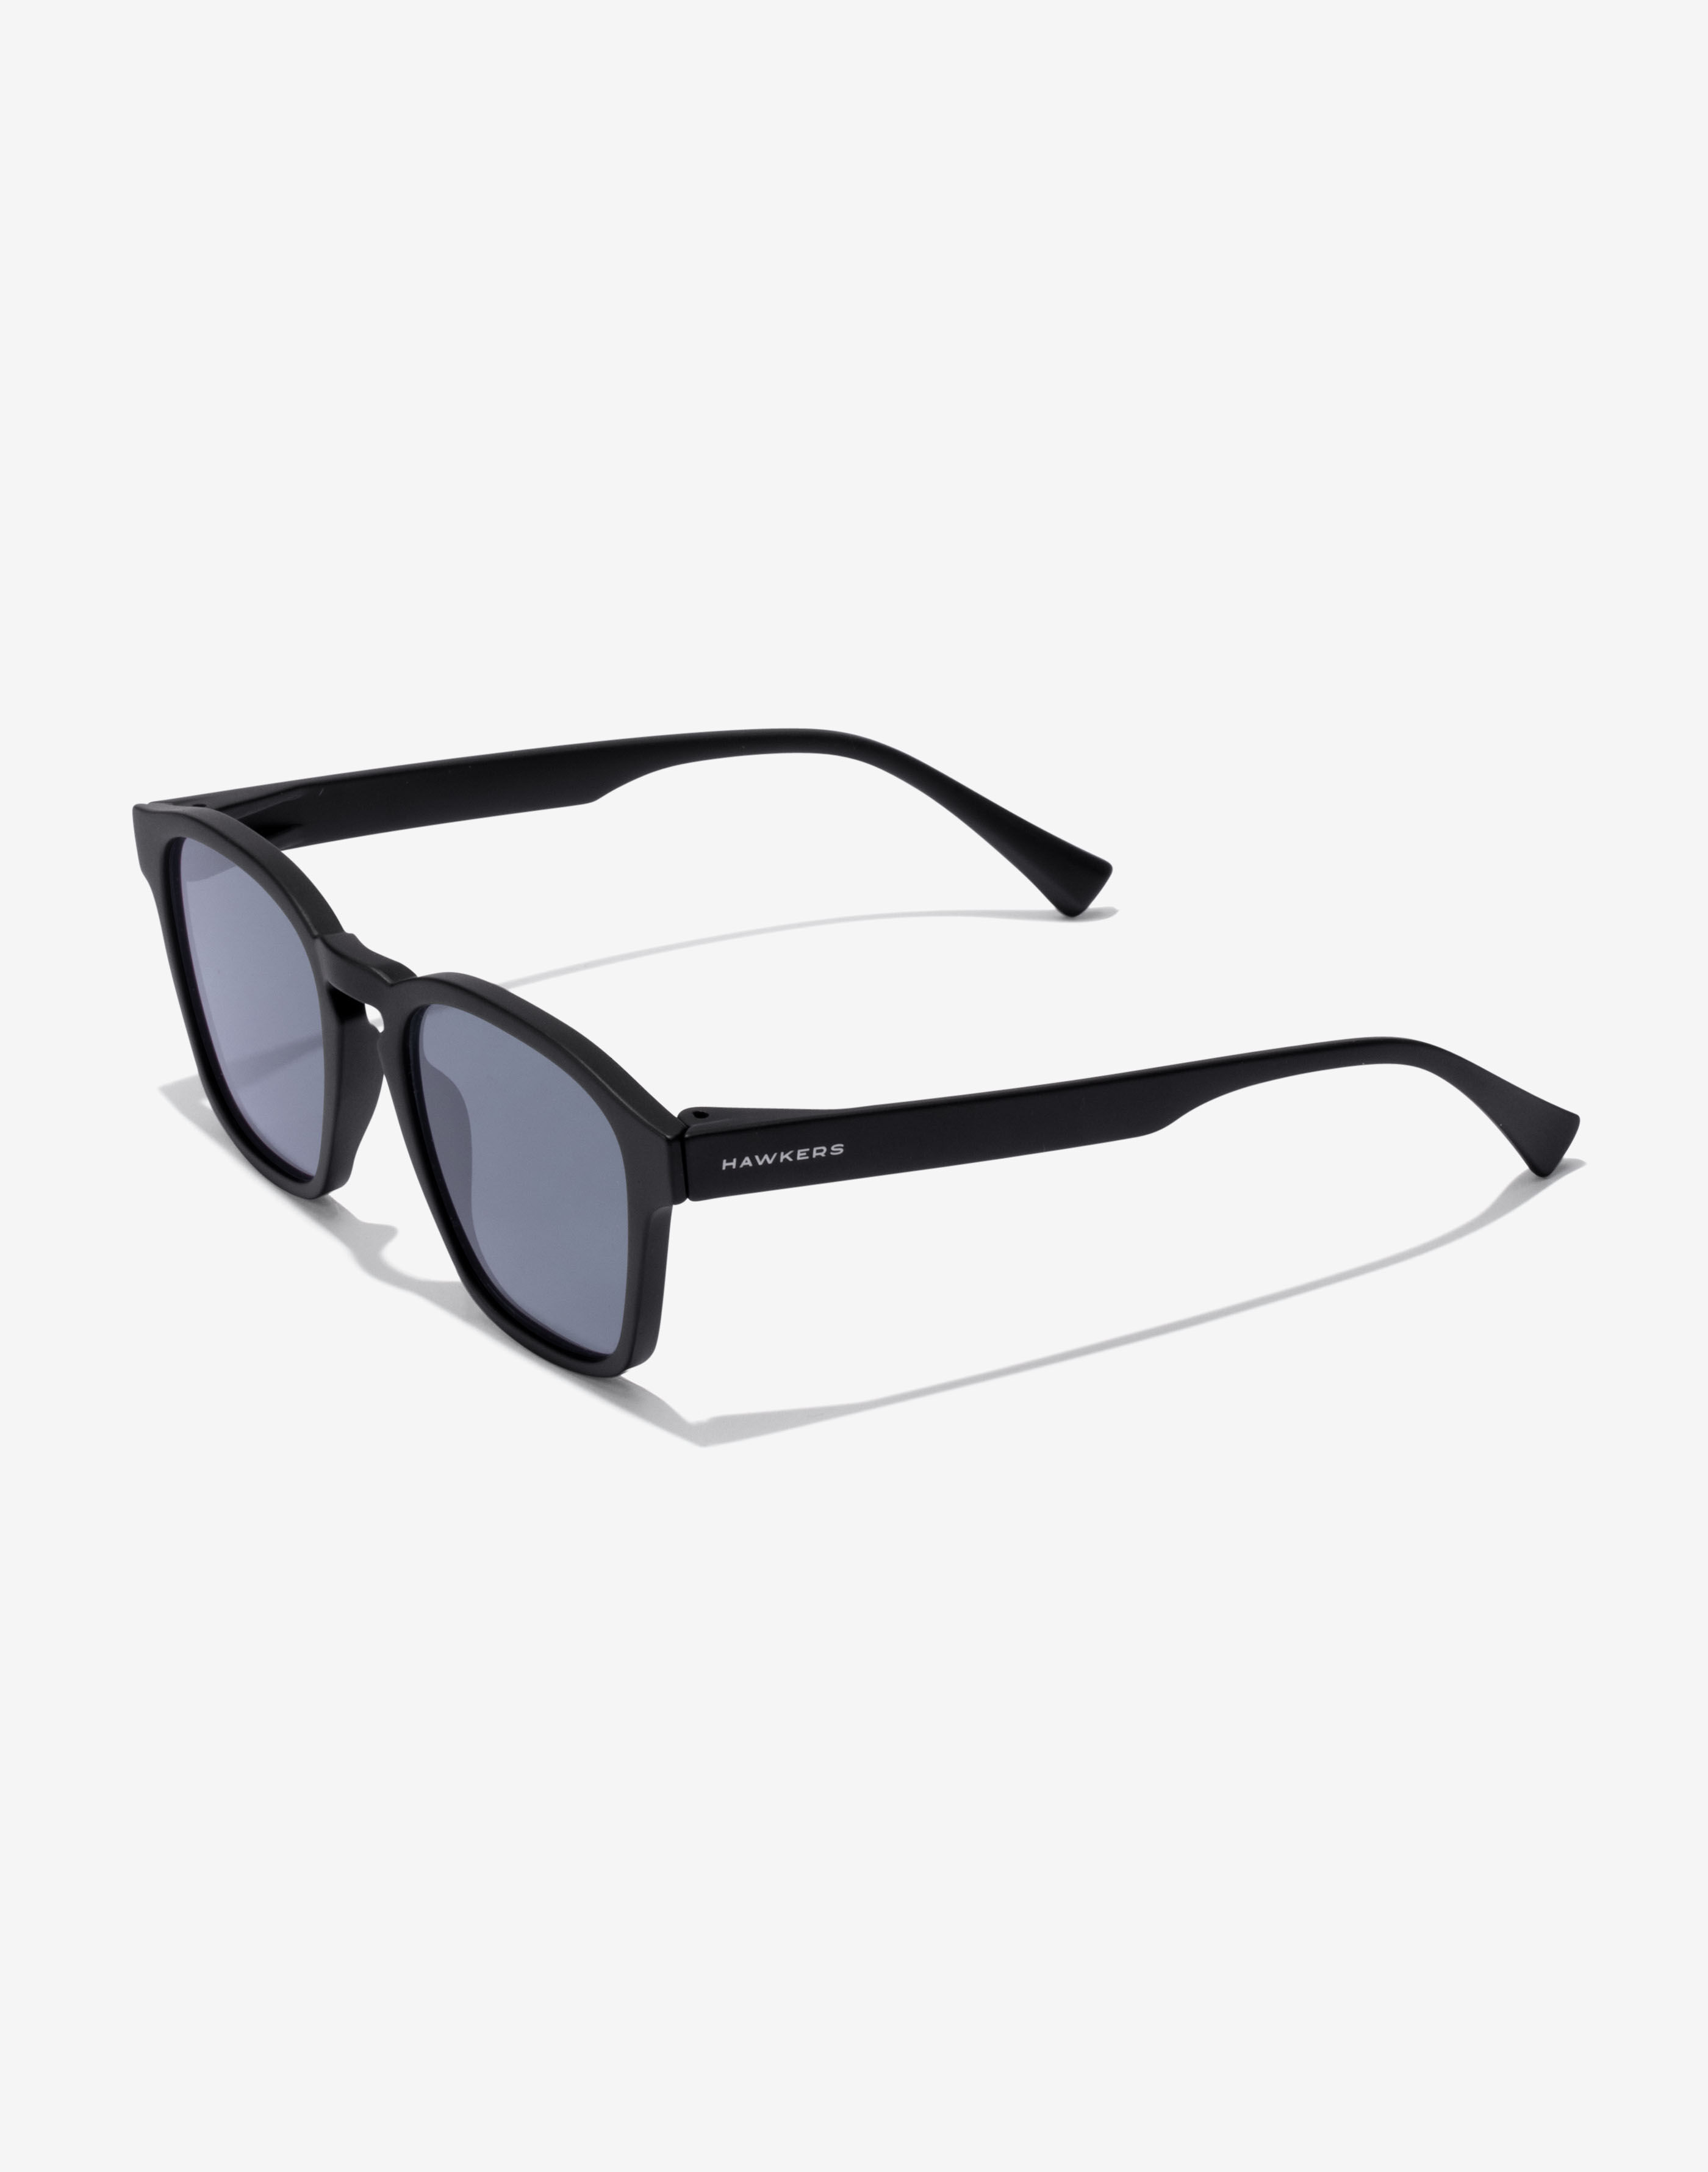 Skullrider Polarized Sunglasses Group Hawkers Carbon black pink camo Classic 